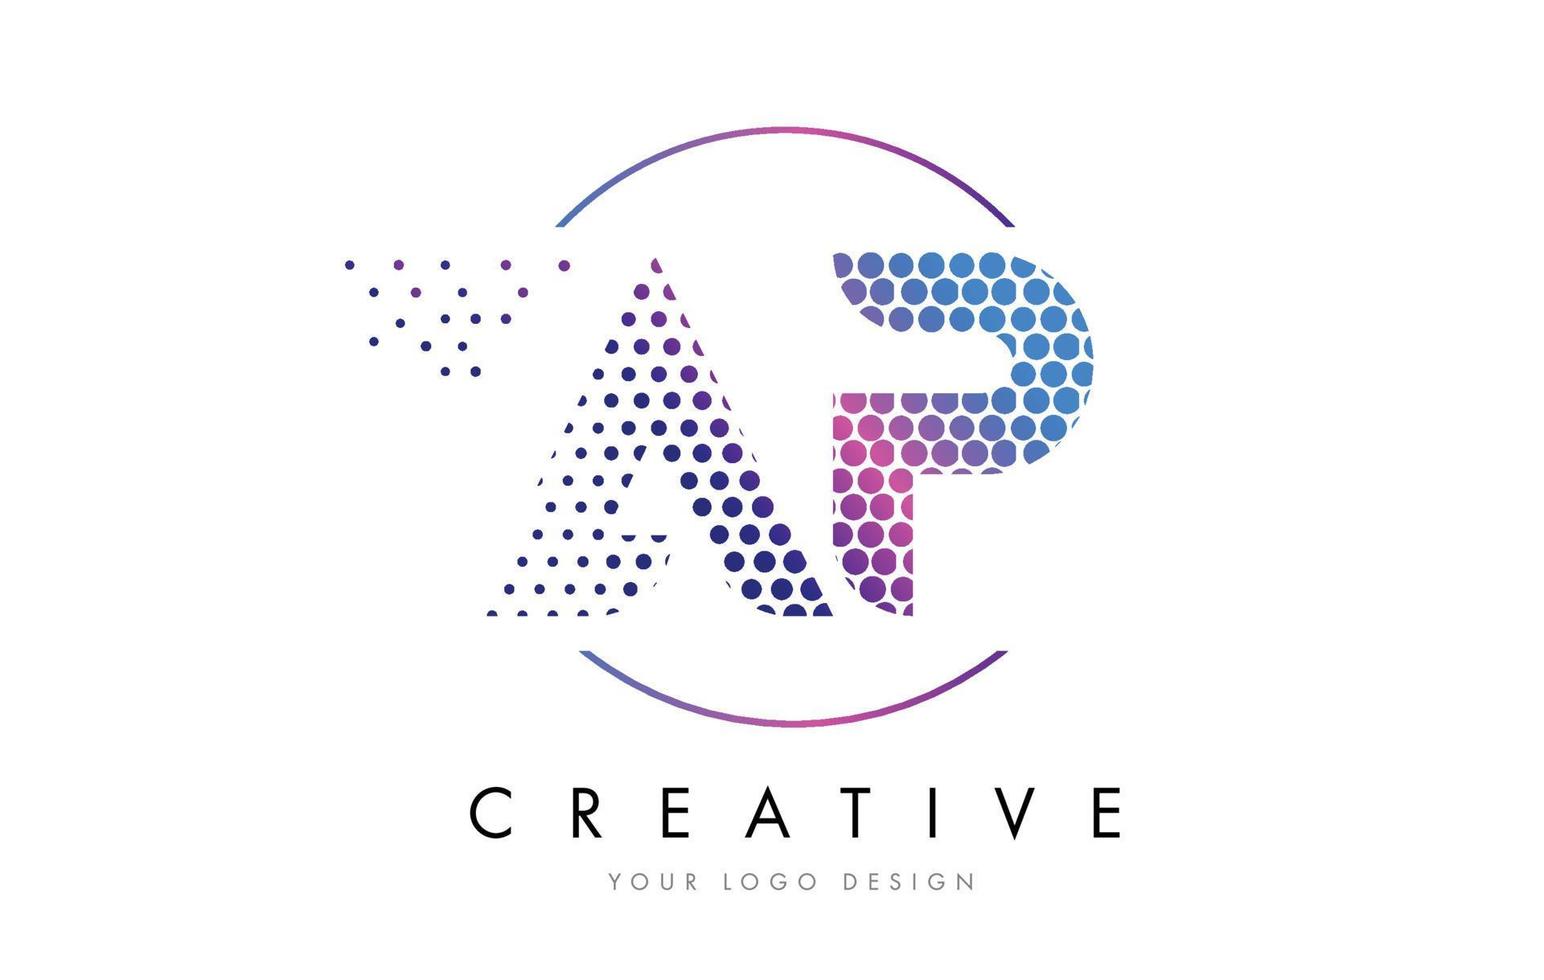 ap ap rosa magenta letra bolha pontilhada logo design vector